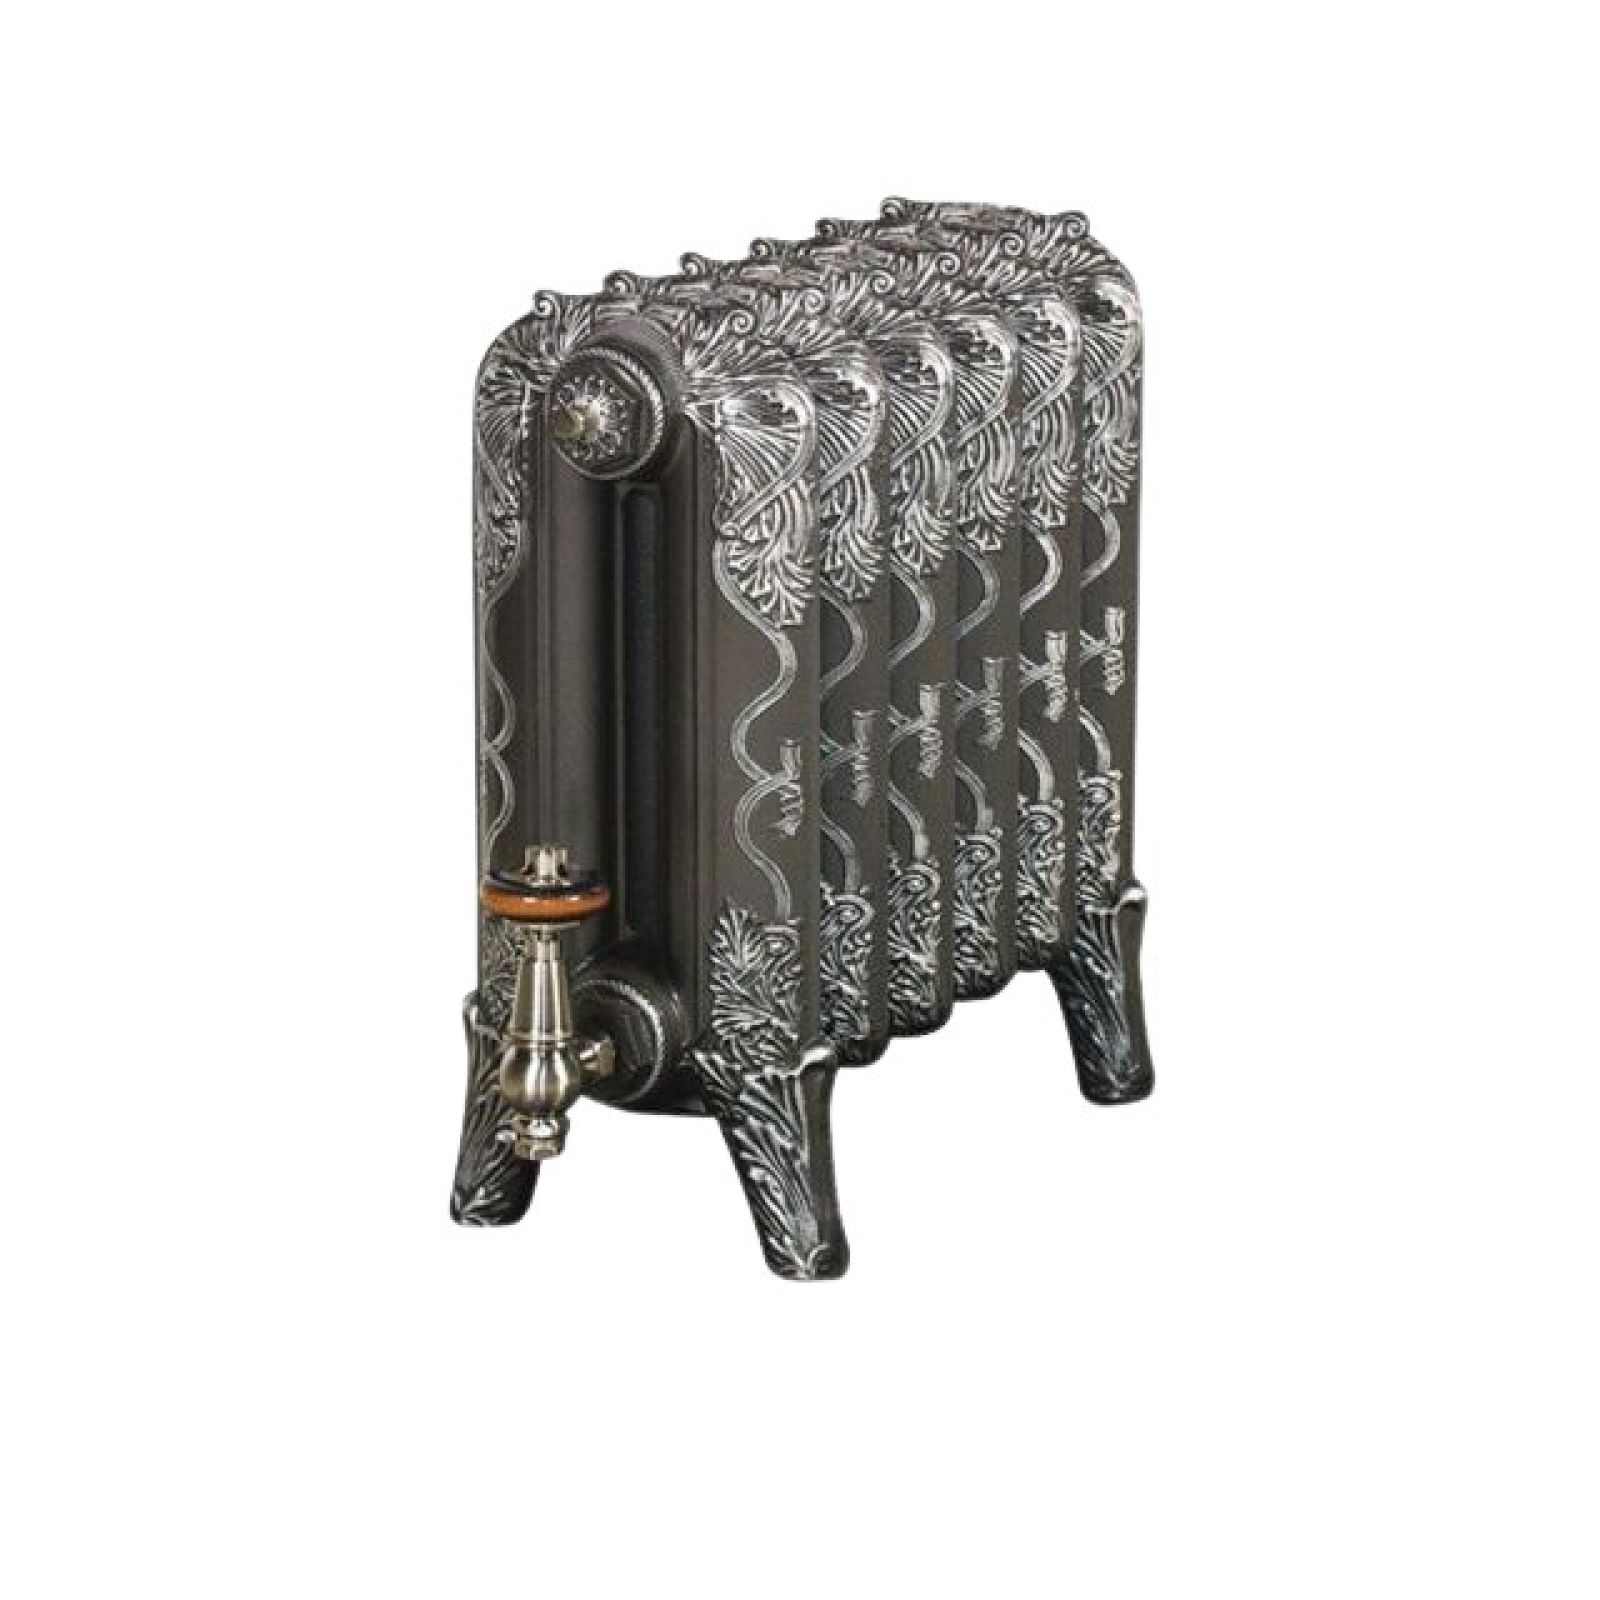 Trafalgar Electric radiator 460mm high